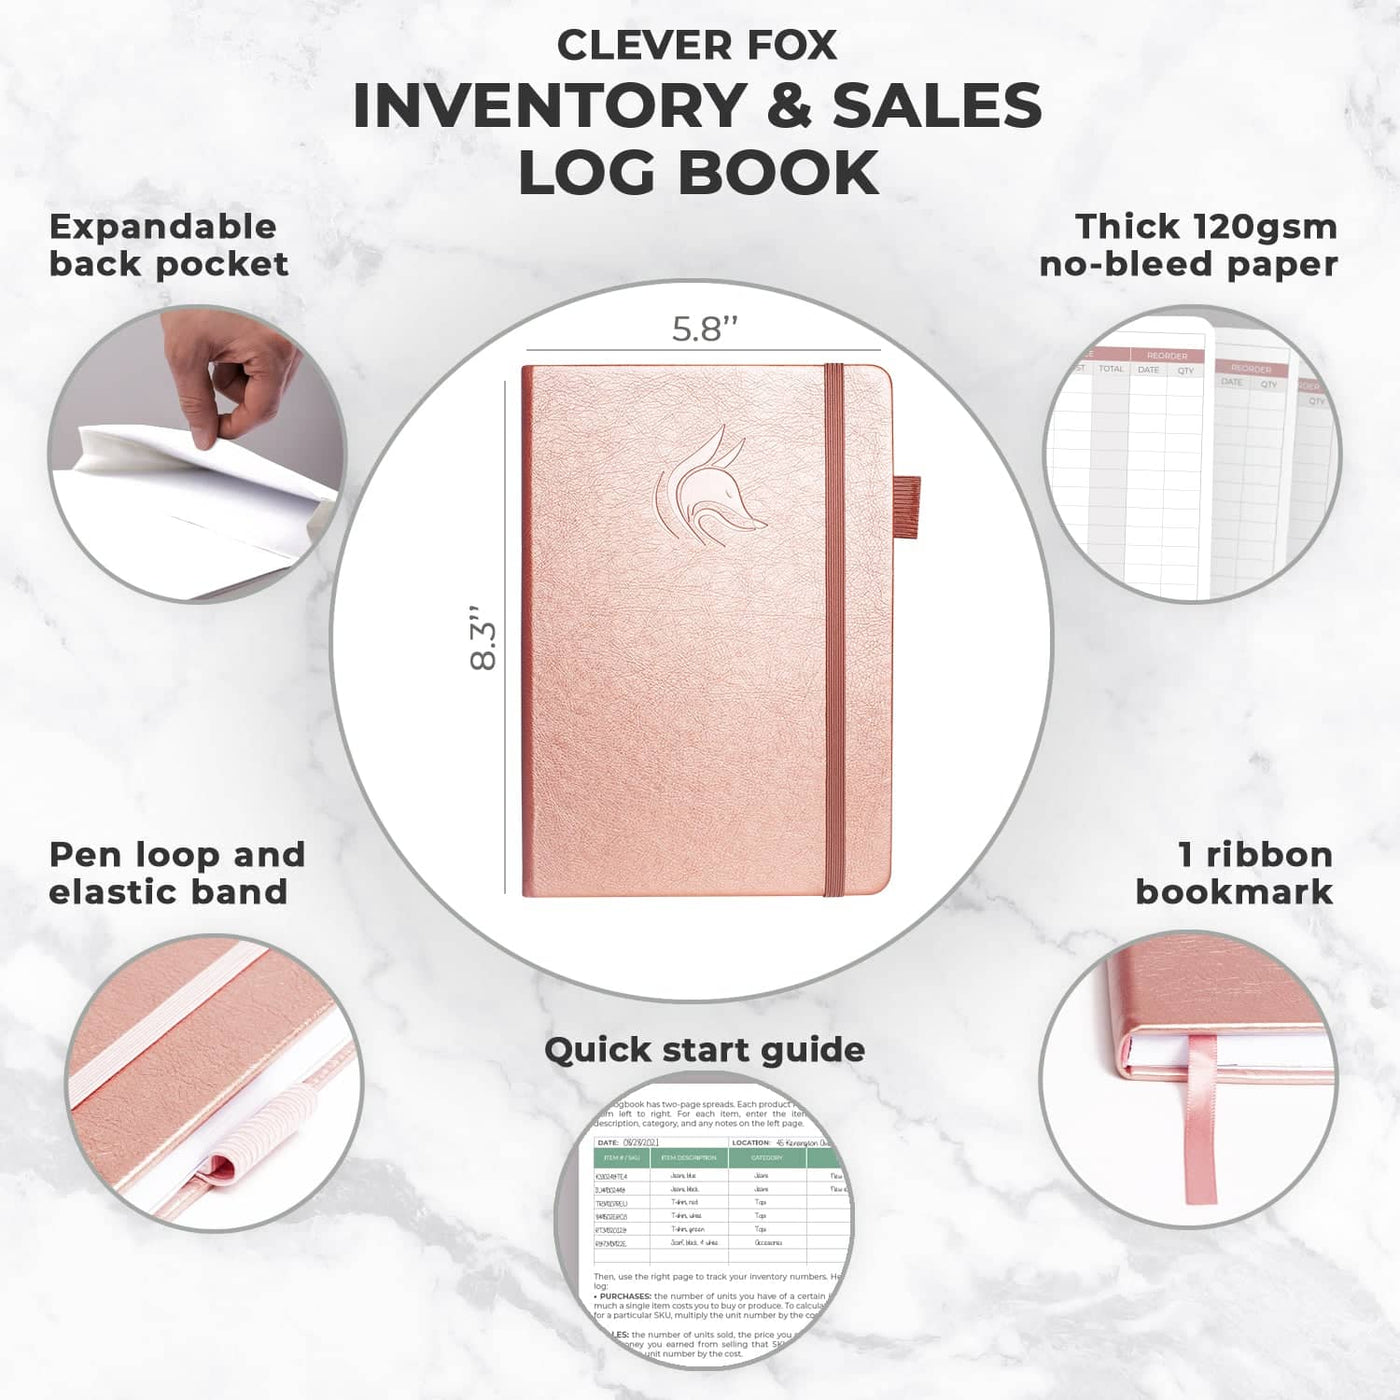 Inventory & Sales Log Book